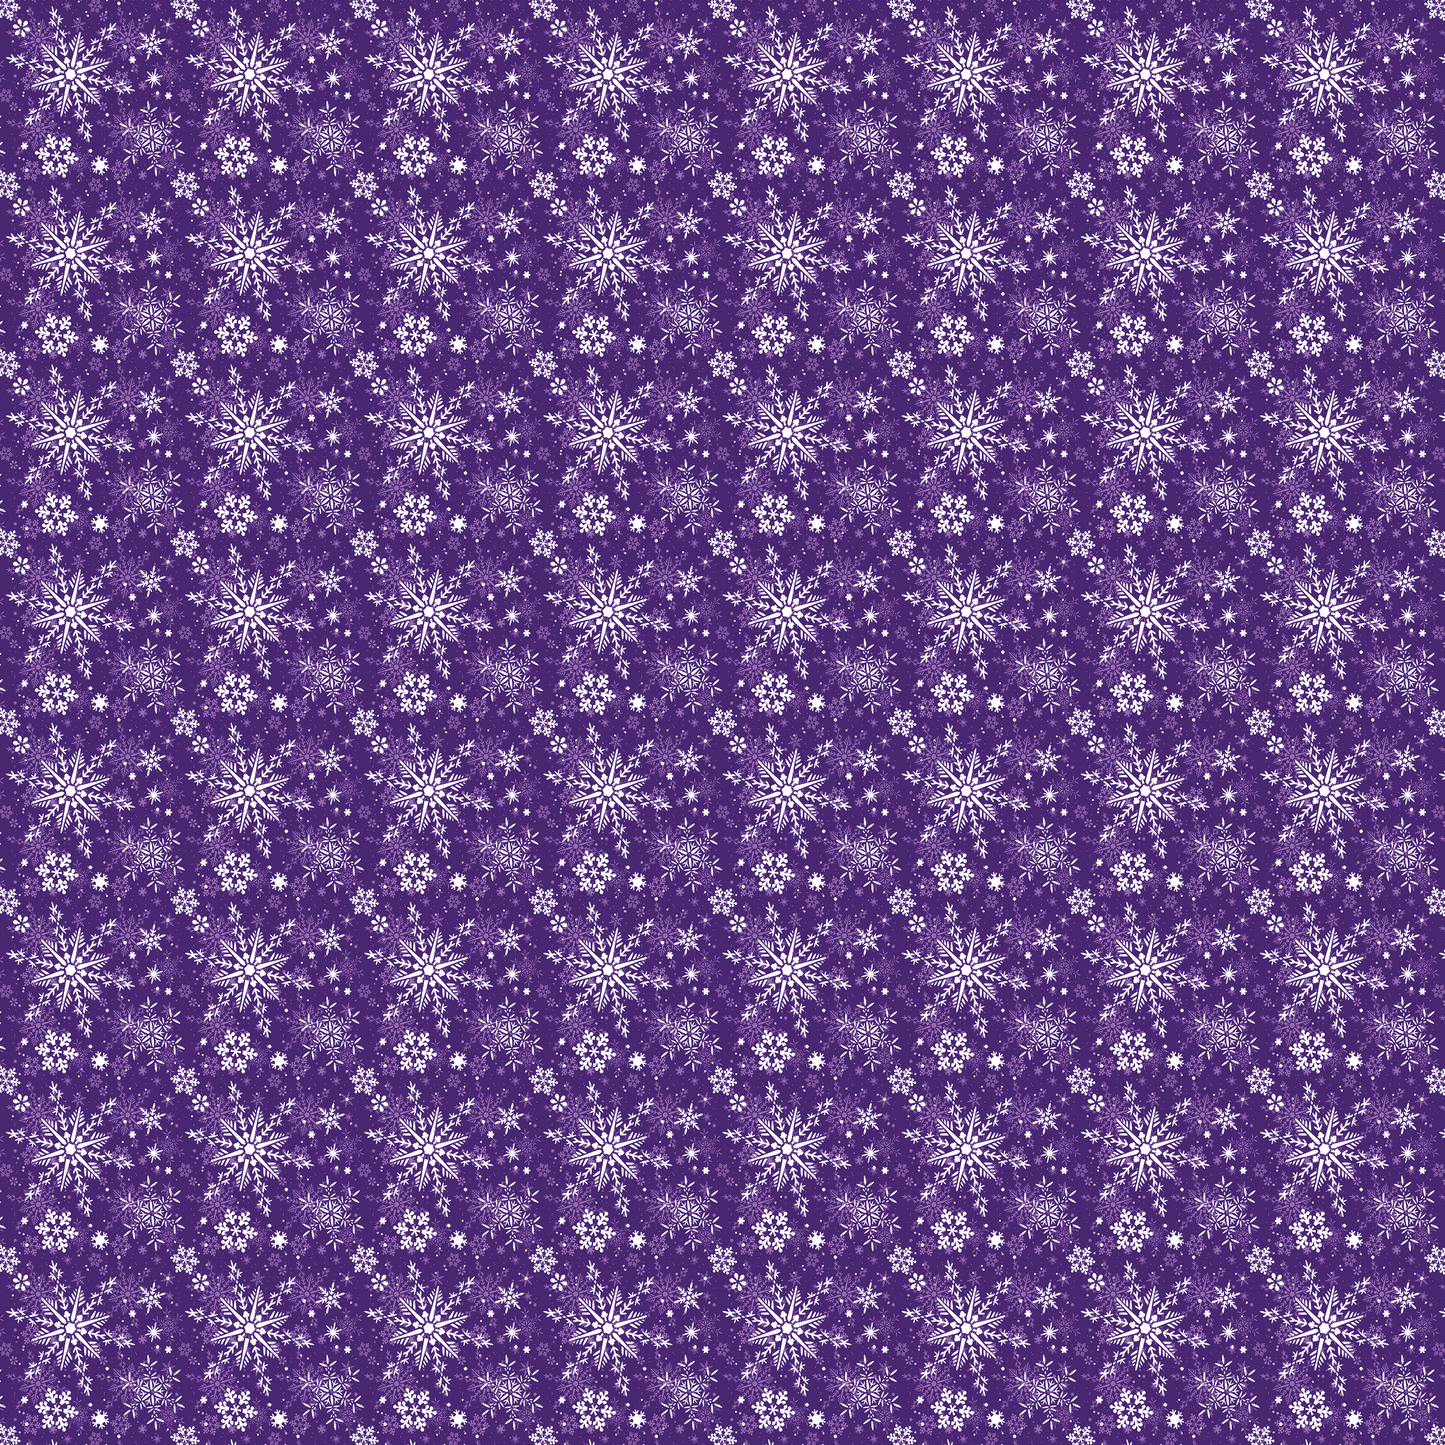 White Snowflakes on a Purple Background 013